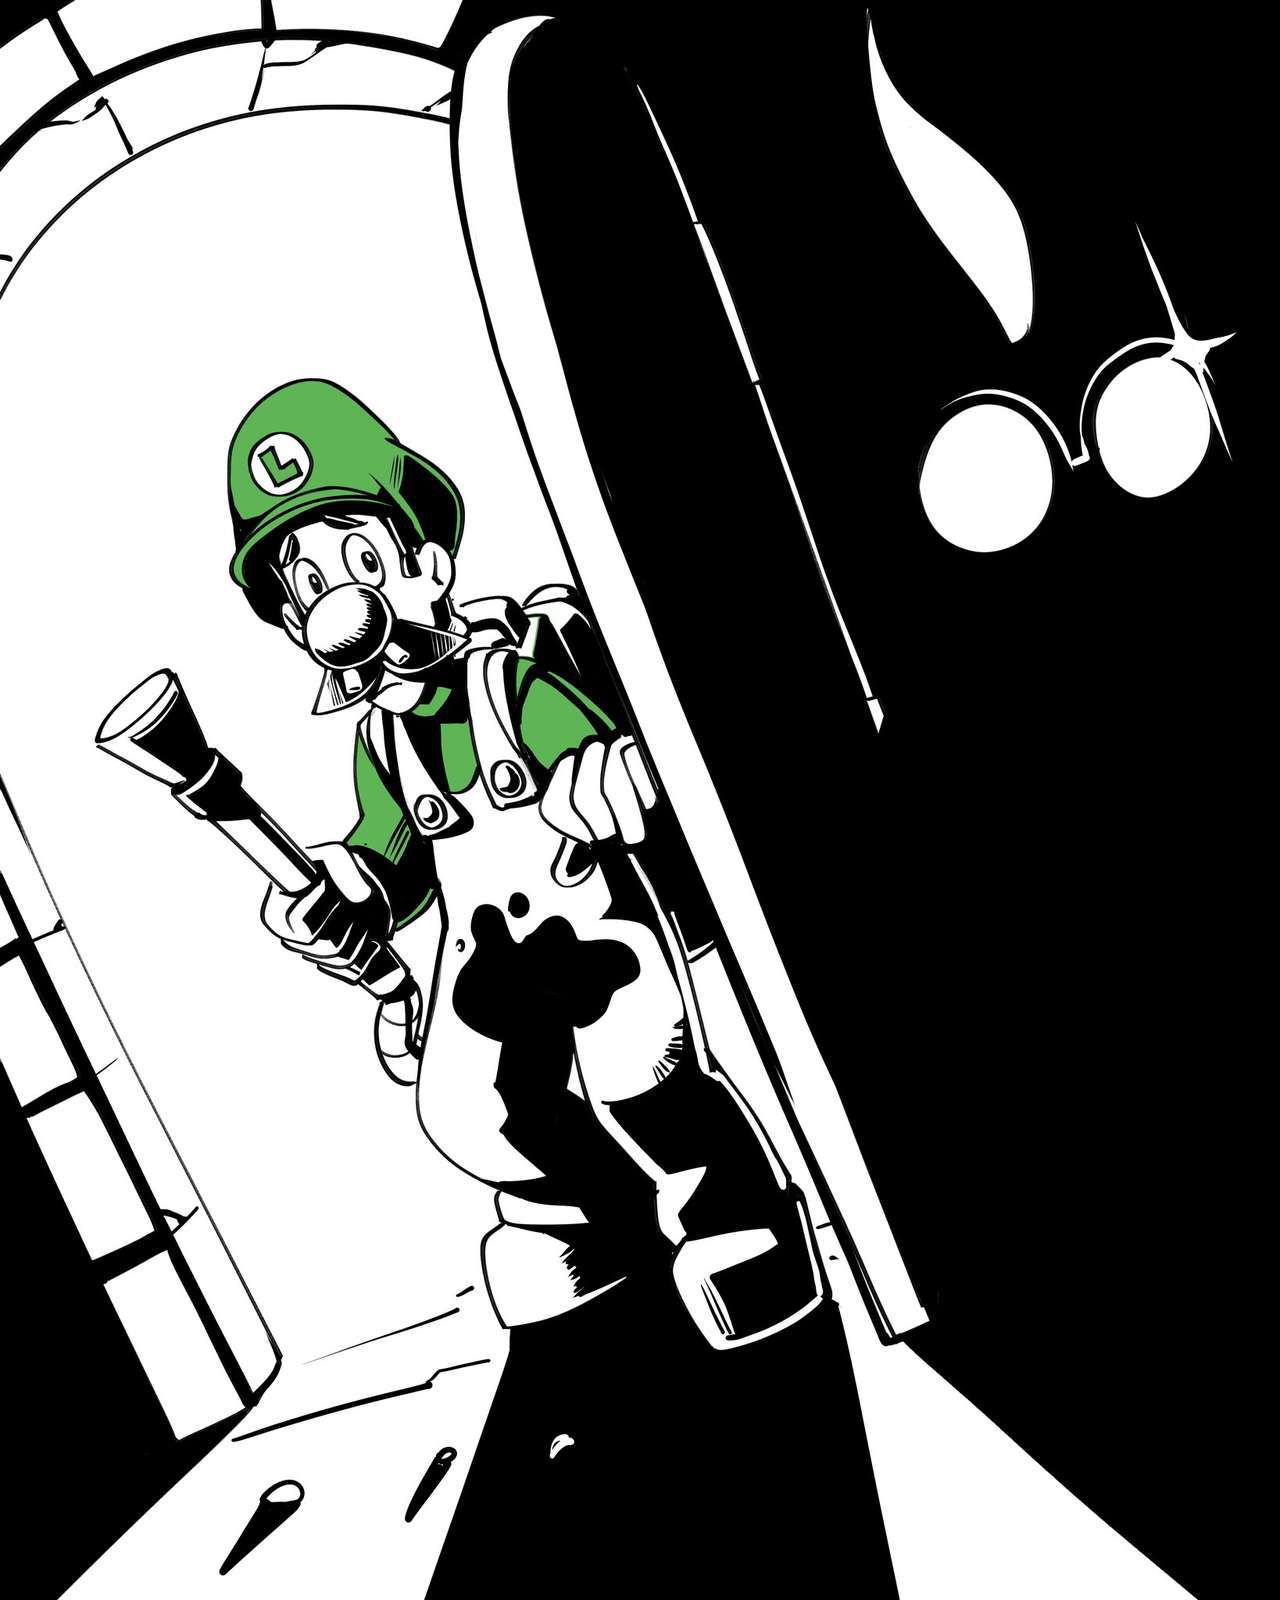 [Nisego] Inktober 2 - Luigi's Mansion (Super Mario Bros.) [Ongoing] 31